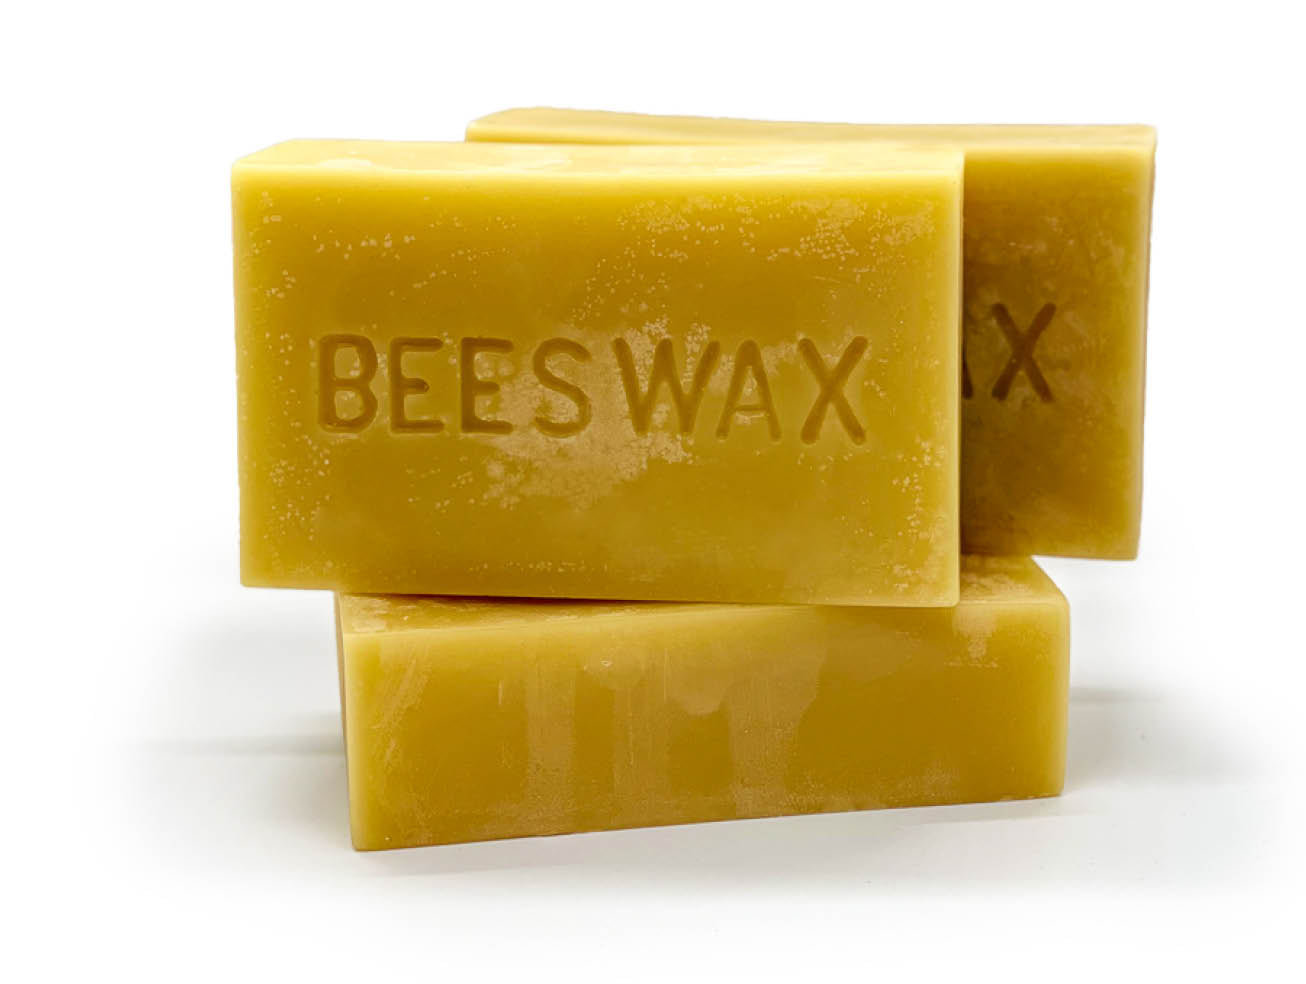 Pure Beeswax 1 lb Block